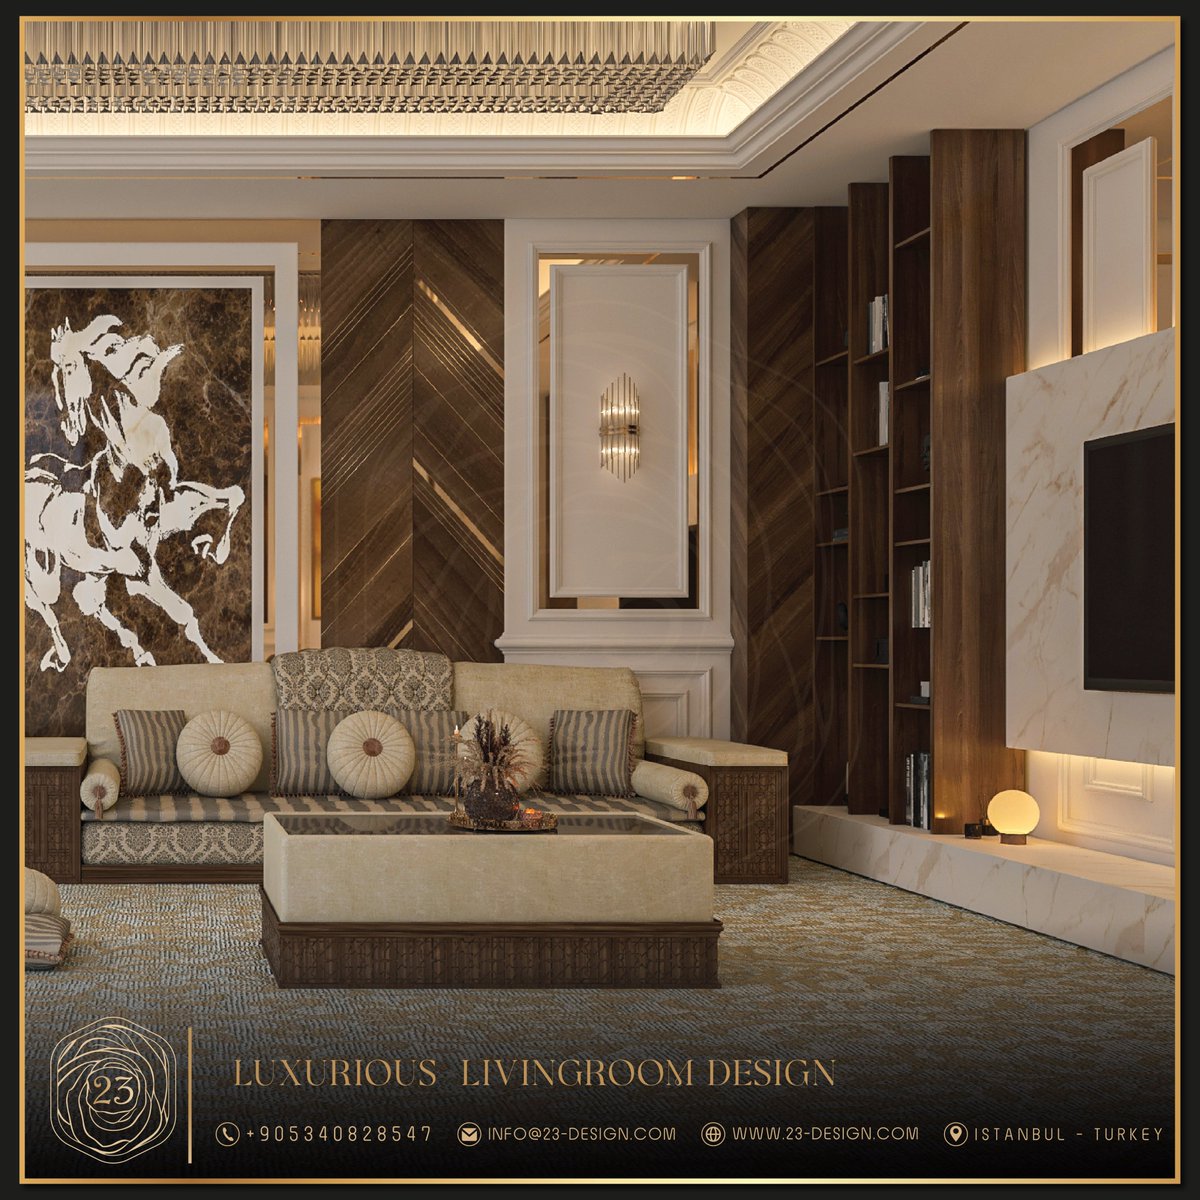 Luxurious Livingroom design
DESIGN BY 23 INTERIOR DESIGN
@23interiordesign.tr
@23_interior_design
‌+90-534-082-85-47⁩
Wa.Me/905340828547
#interiordesign #design #interior #homedecor #architecture #home #decor #interiors #homedesign #art #interiordesigner